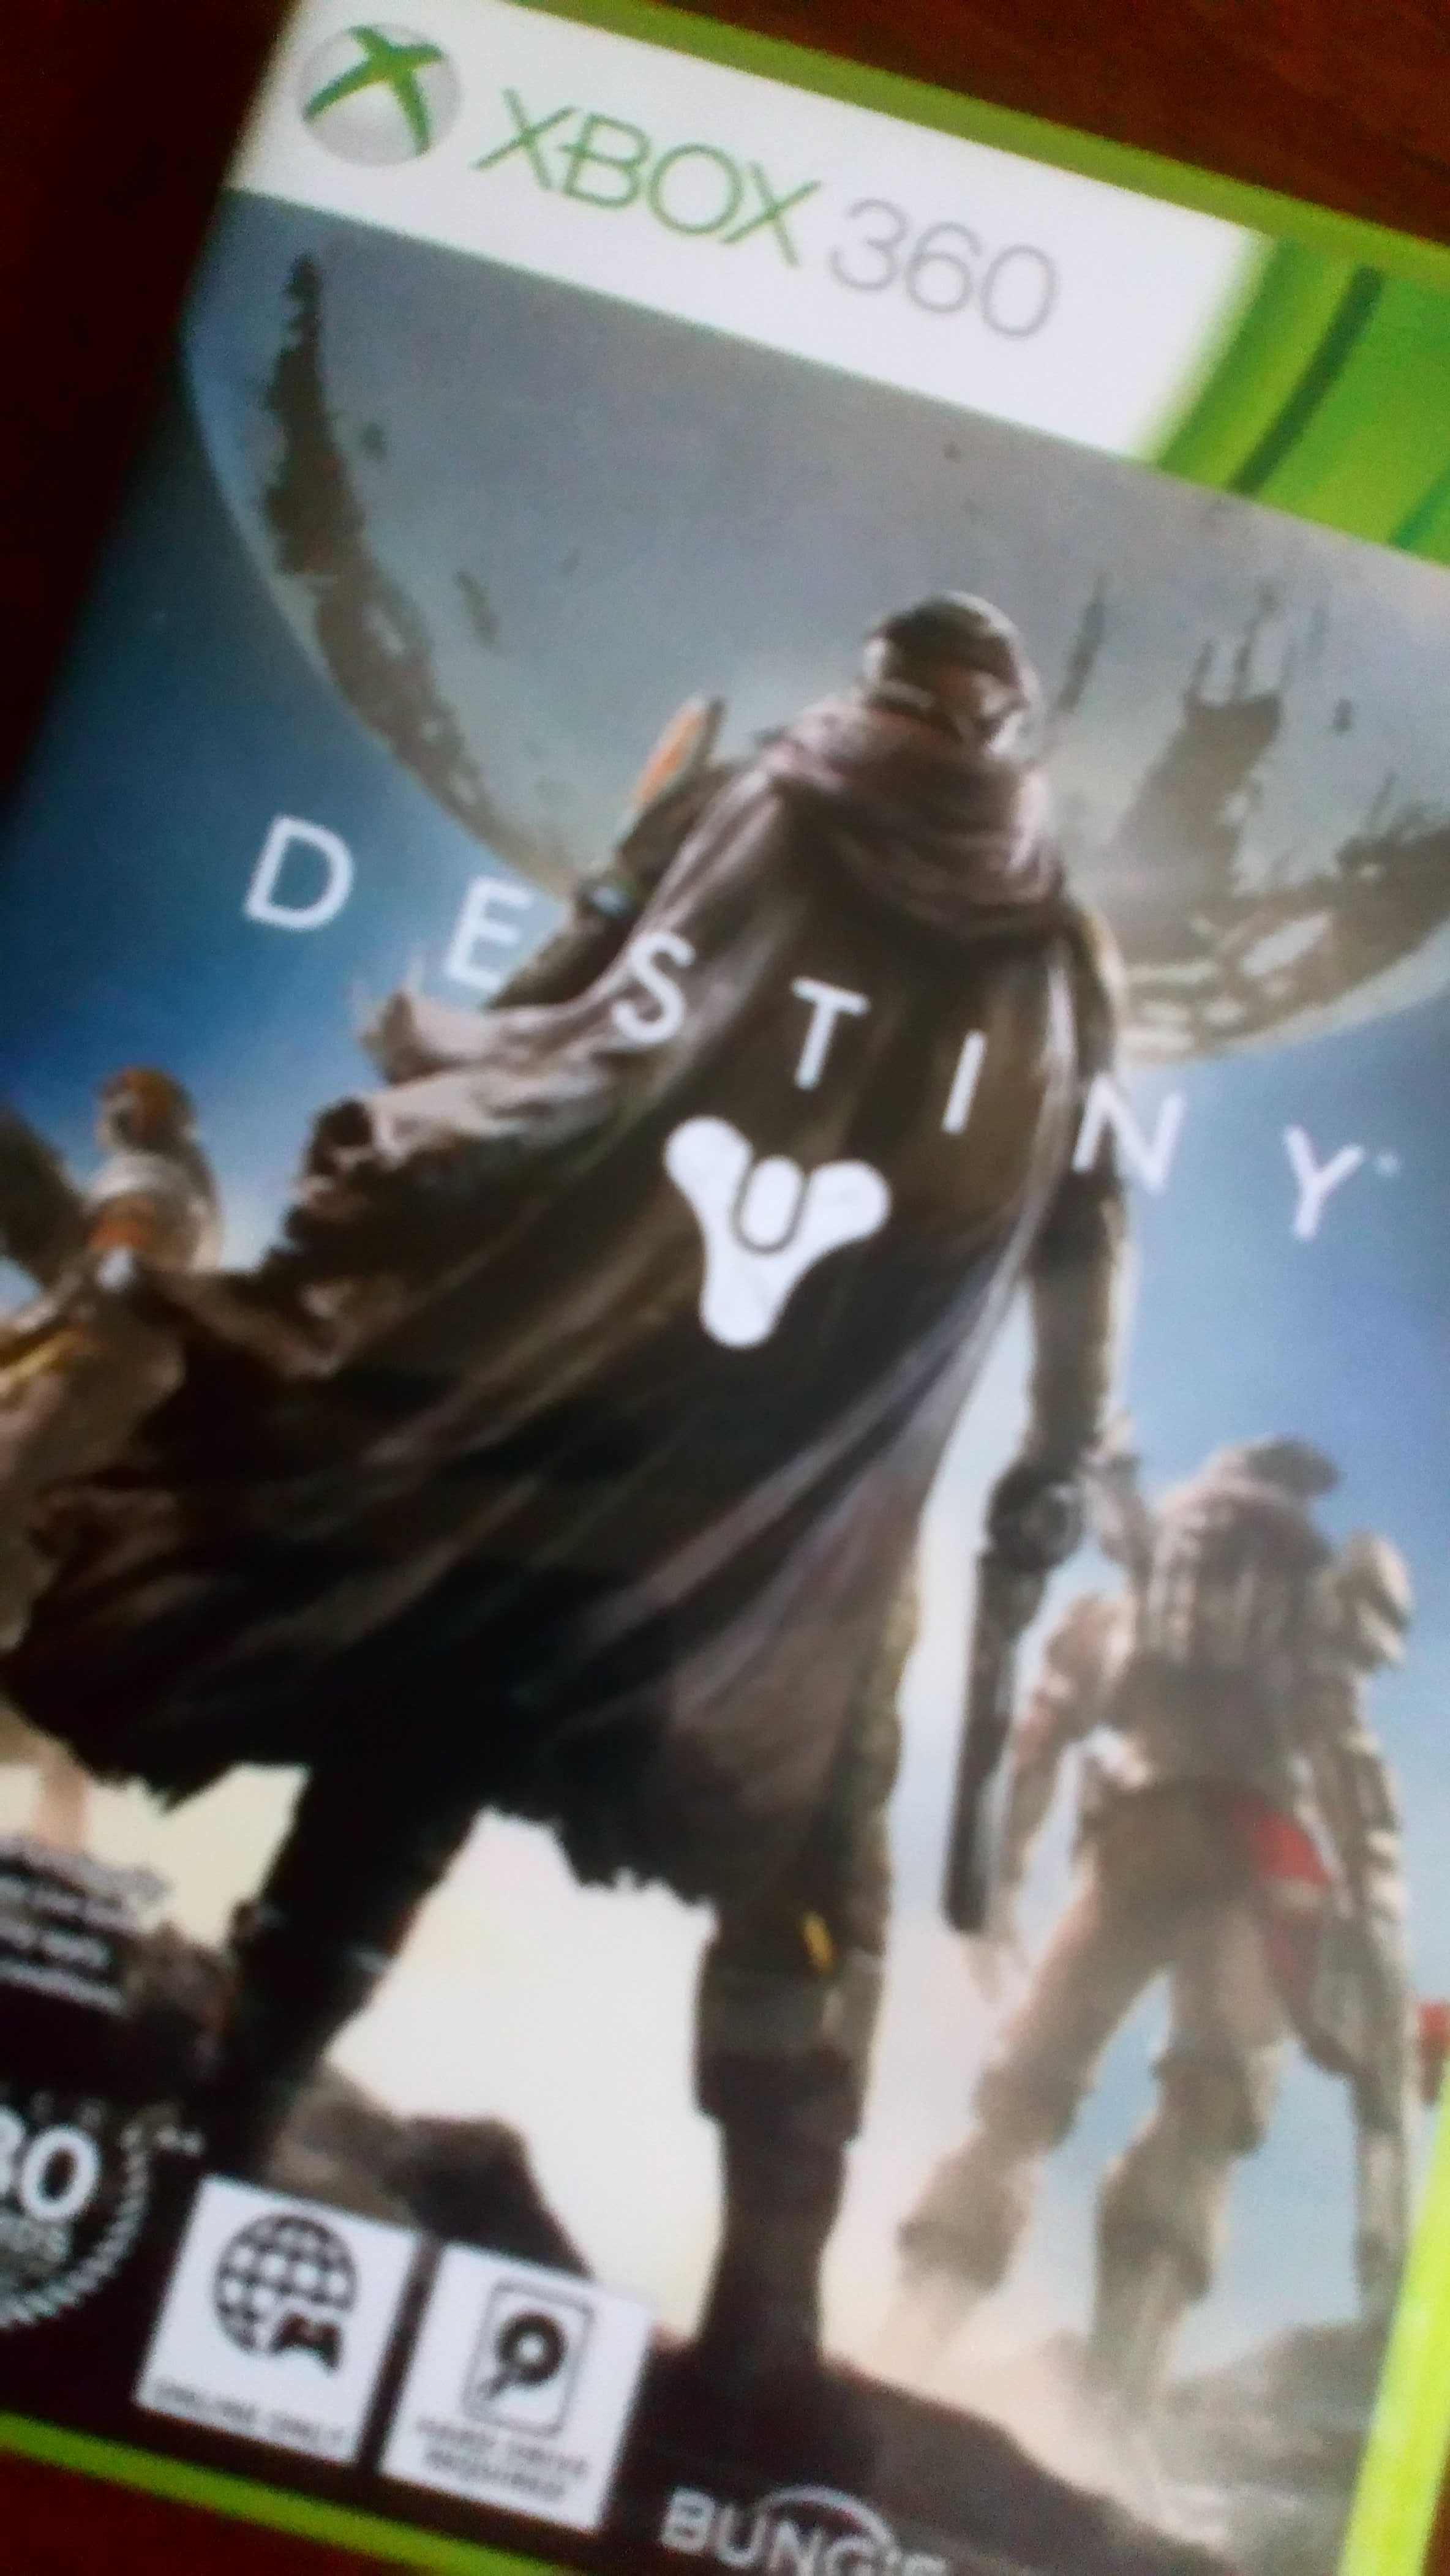 Gra Destiny, Xbox 360